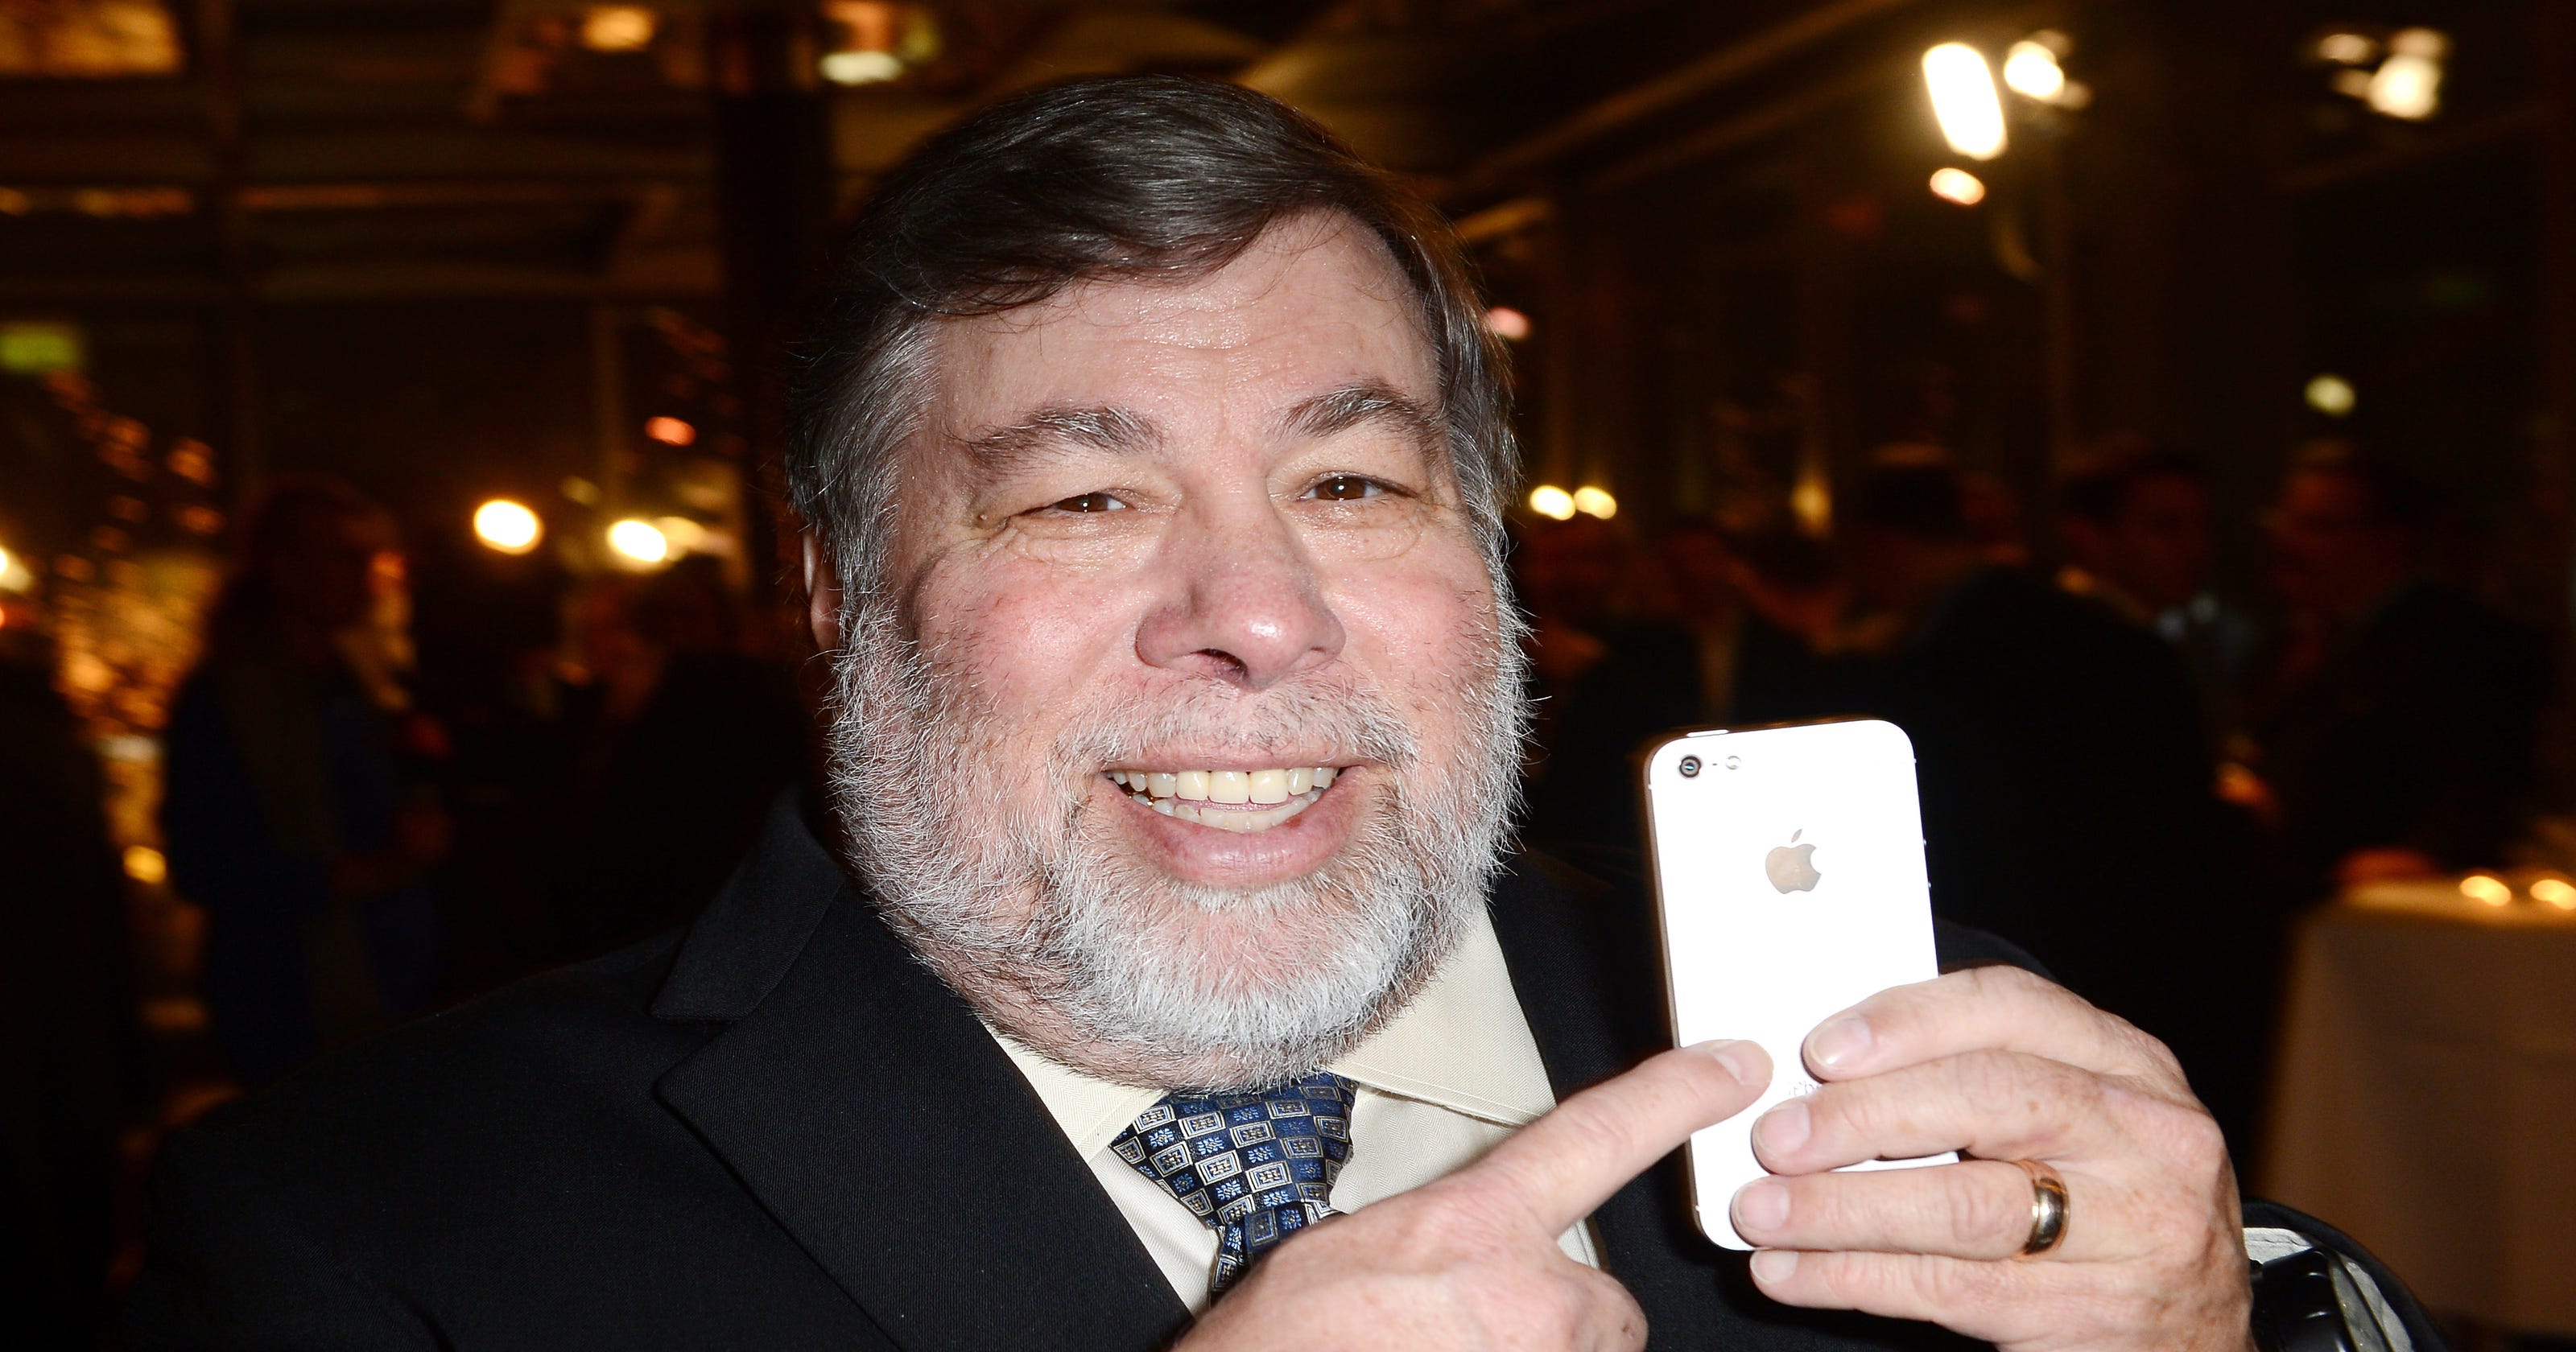 So, what does Steve Wozniak think of 'Jobs'?